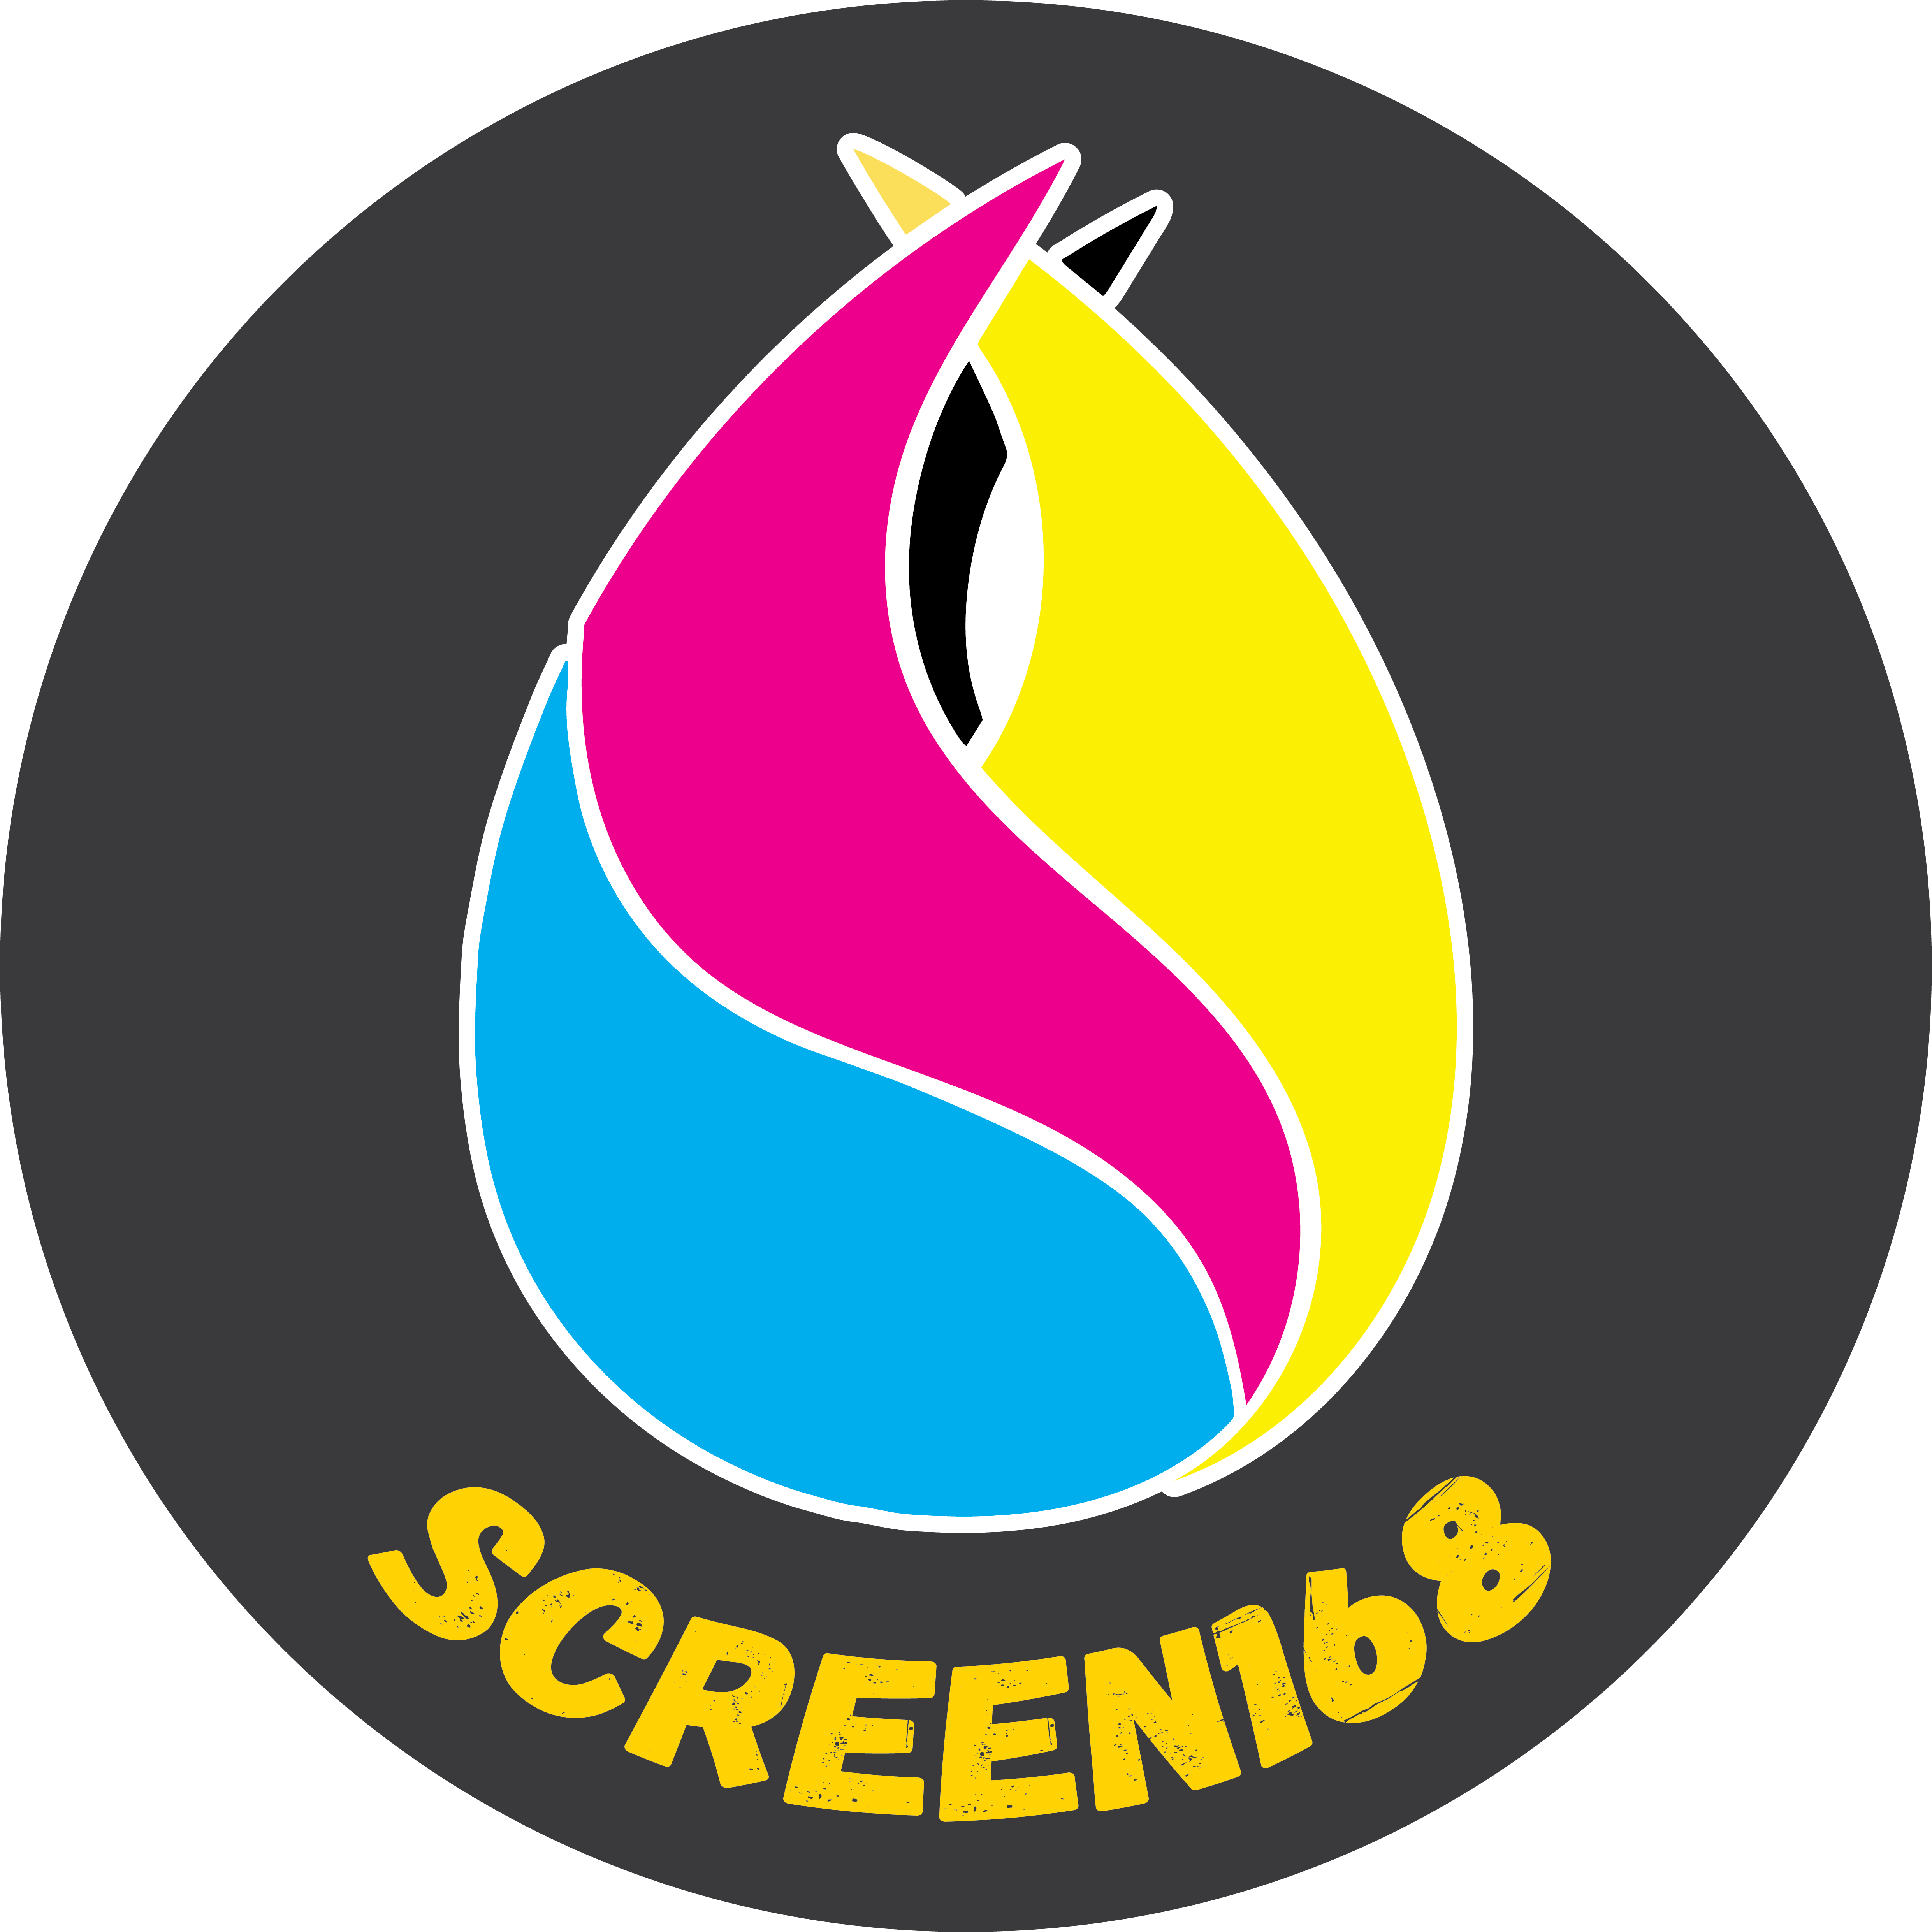 Logo_Screen168